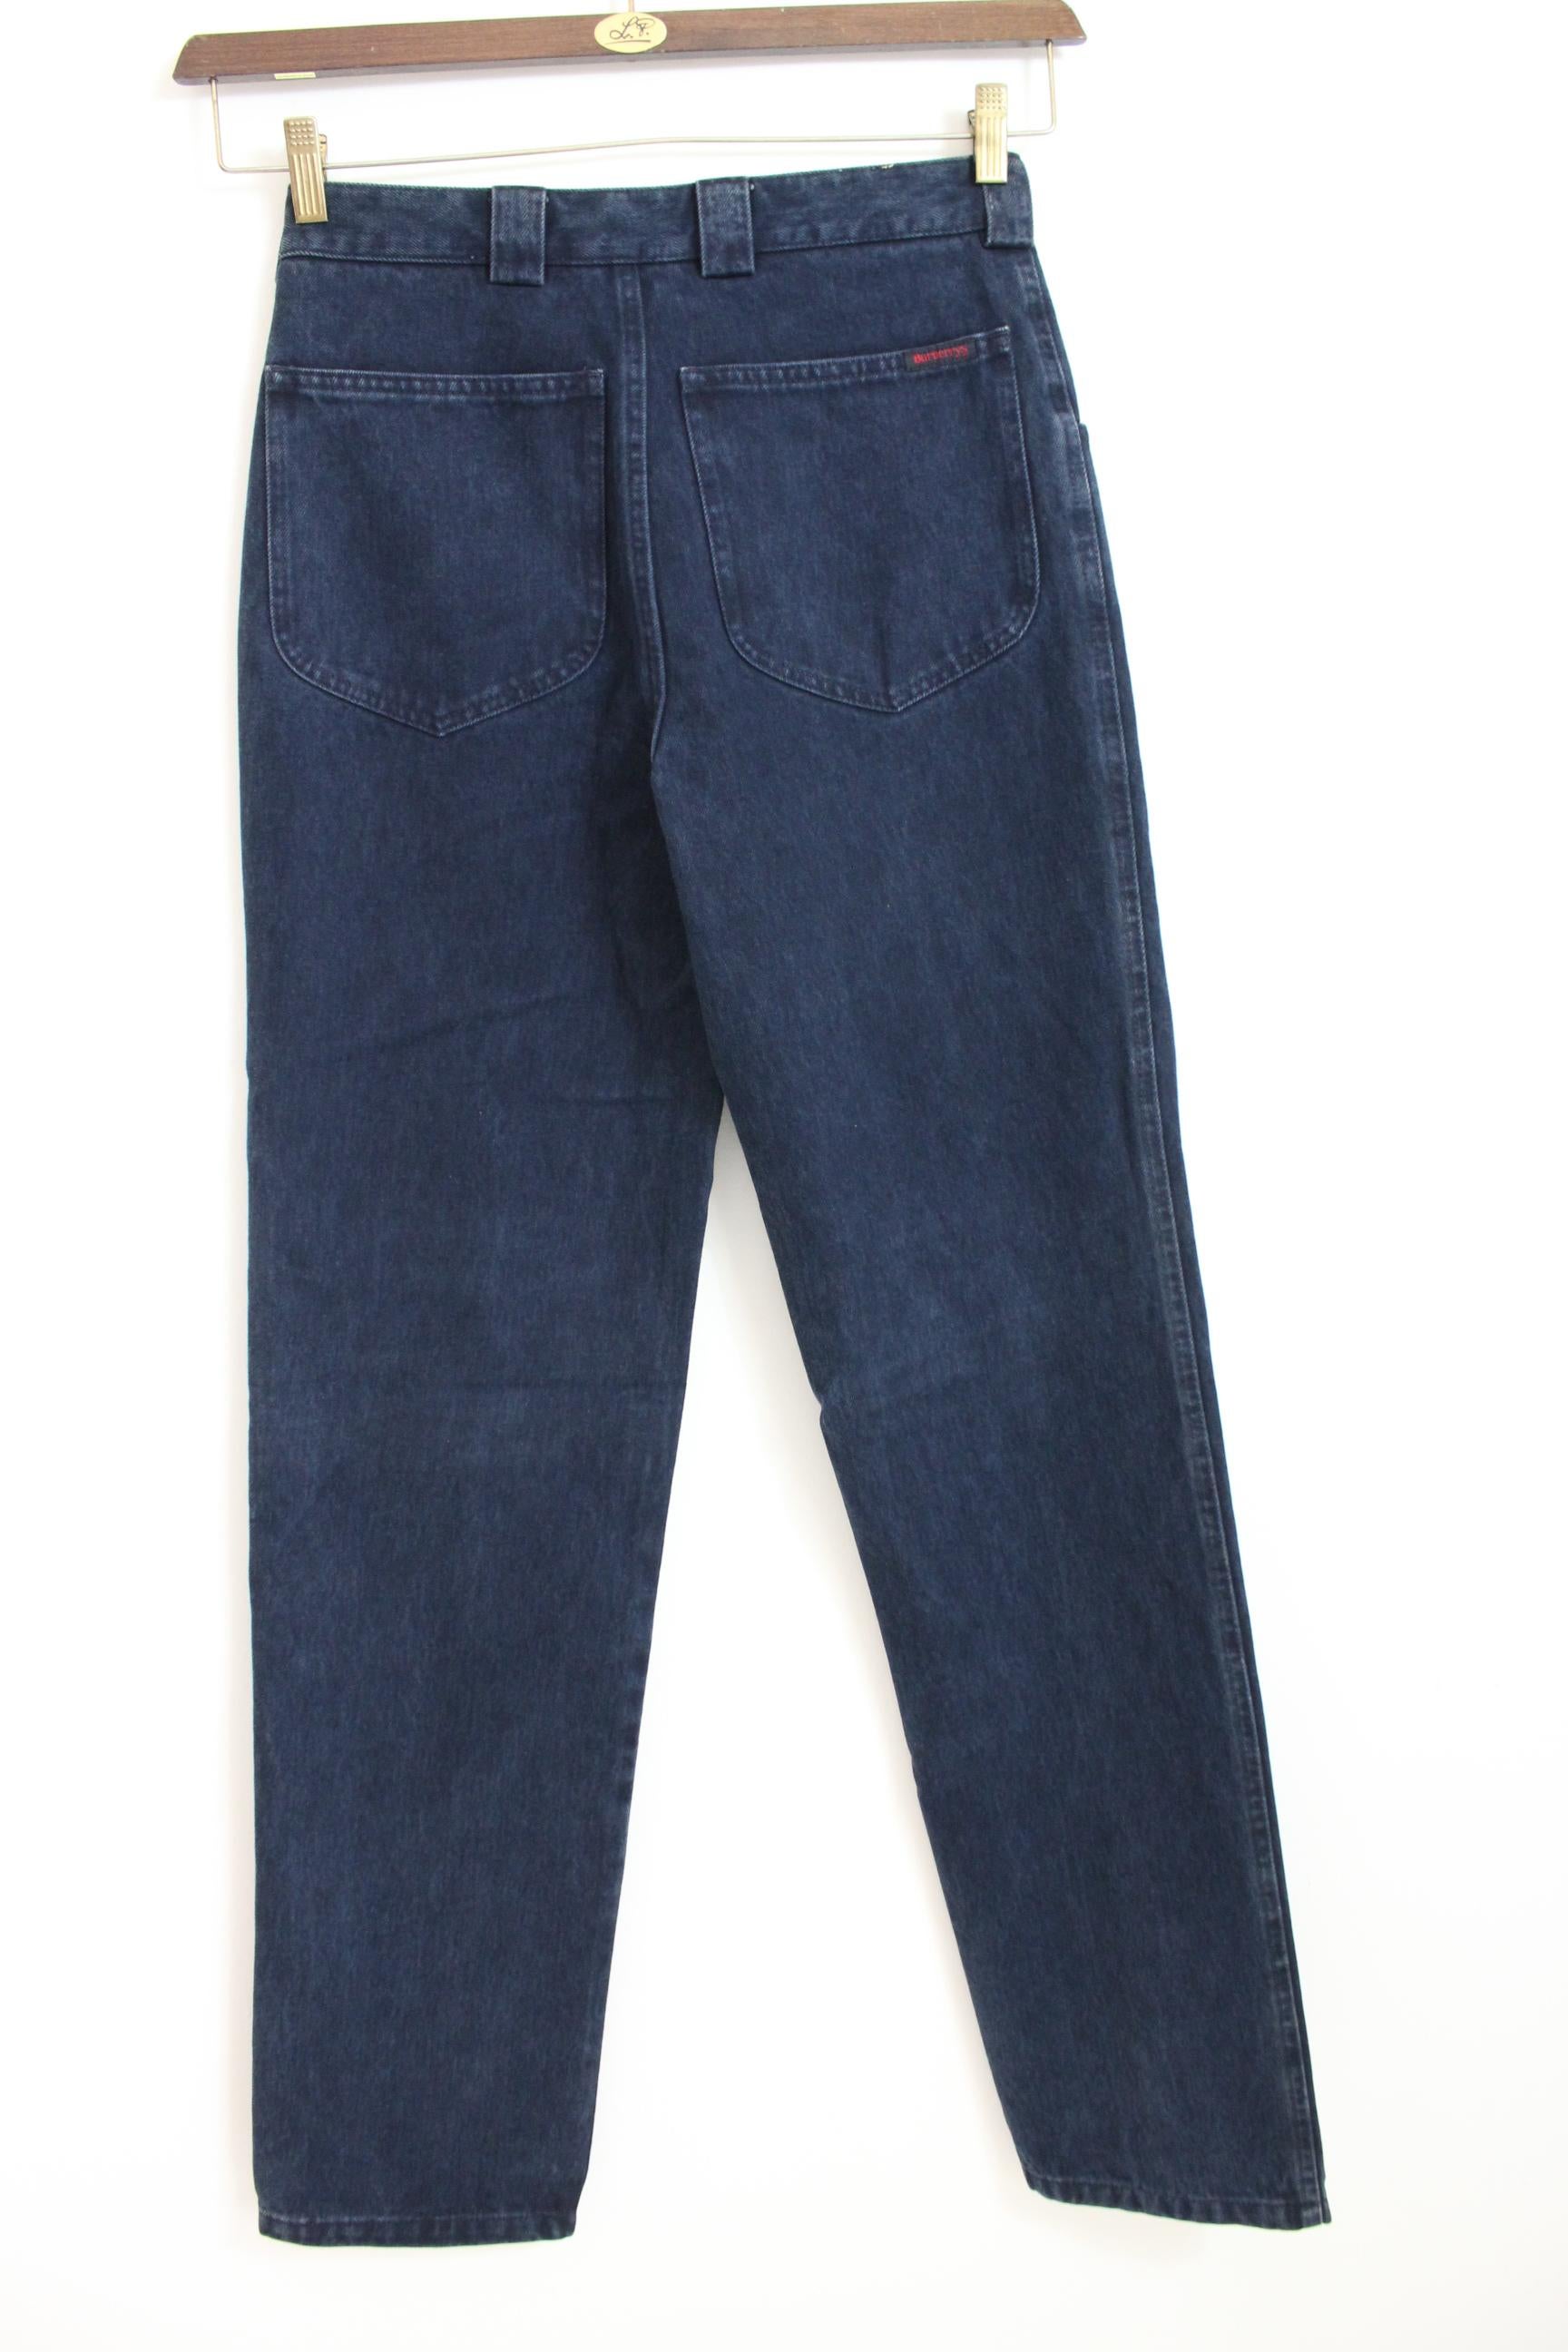 Burberry Blue Denim Cotton Classic Jeans High Waist Pants 1980s NWT 1